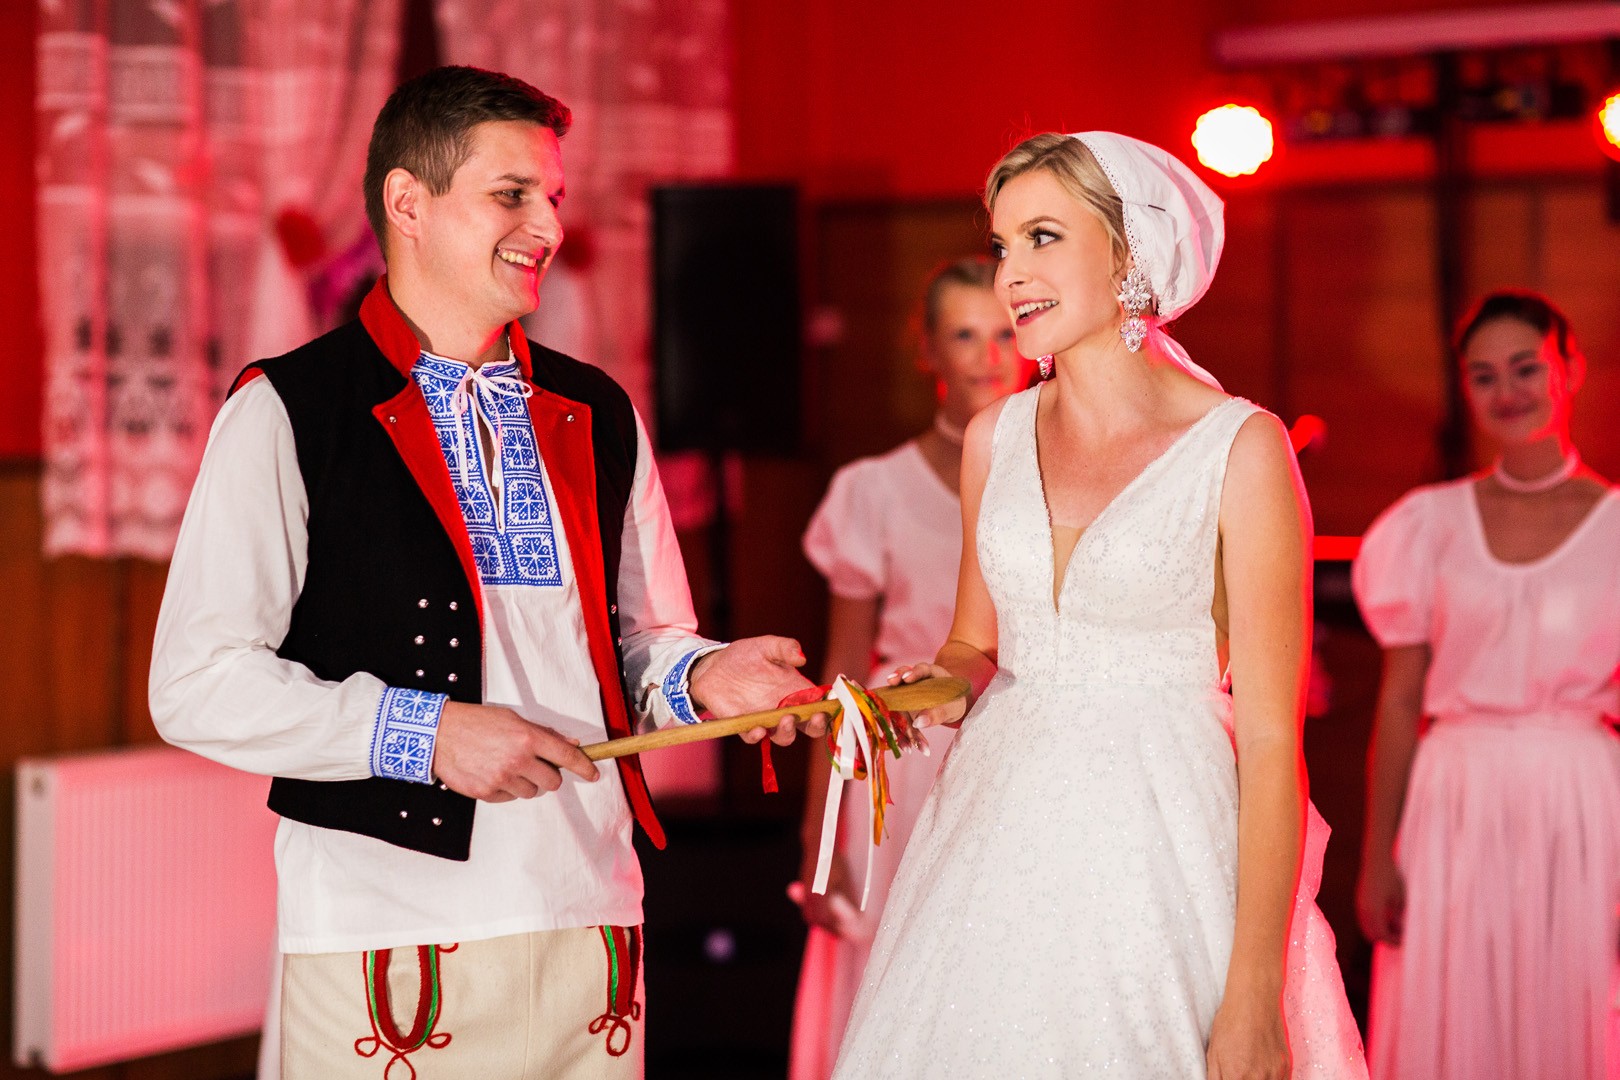 Wedding photos from the wedding day of Miška and Stanka. - 0827.jpg